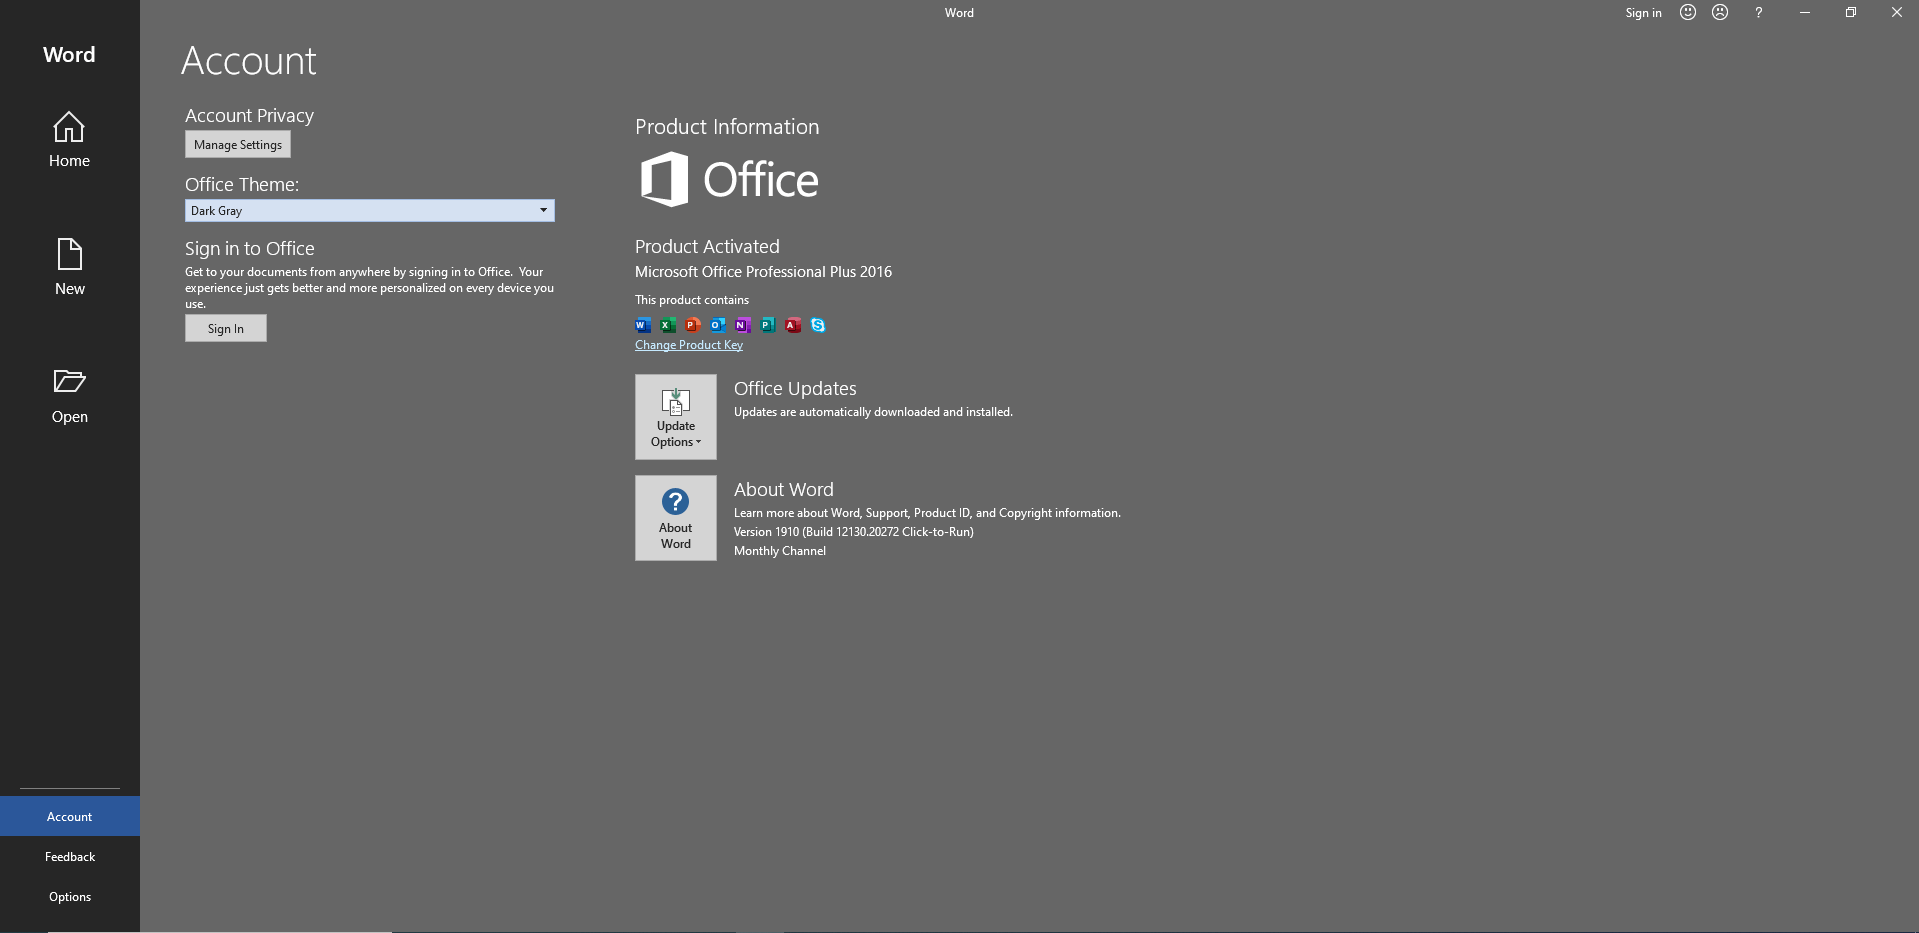 Microsoft office 2016 16.11.1 vl for mac